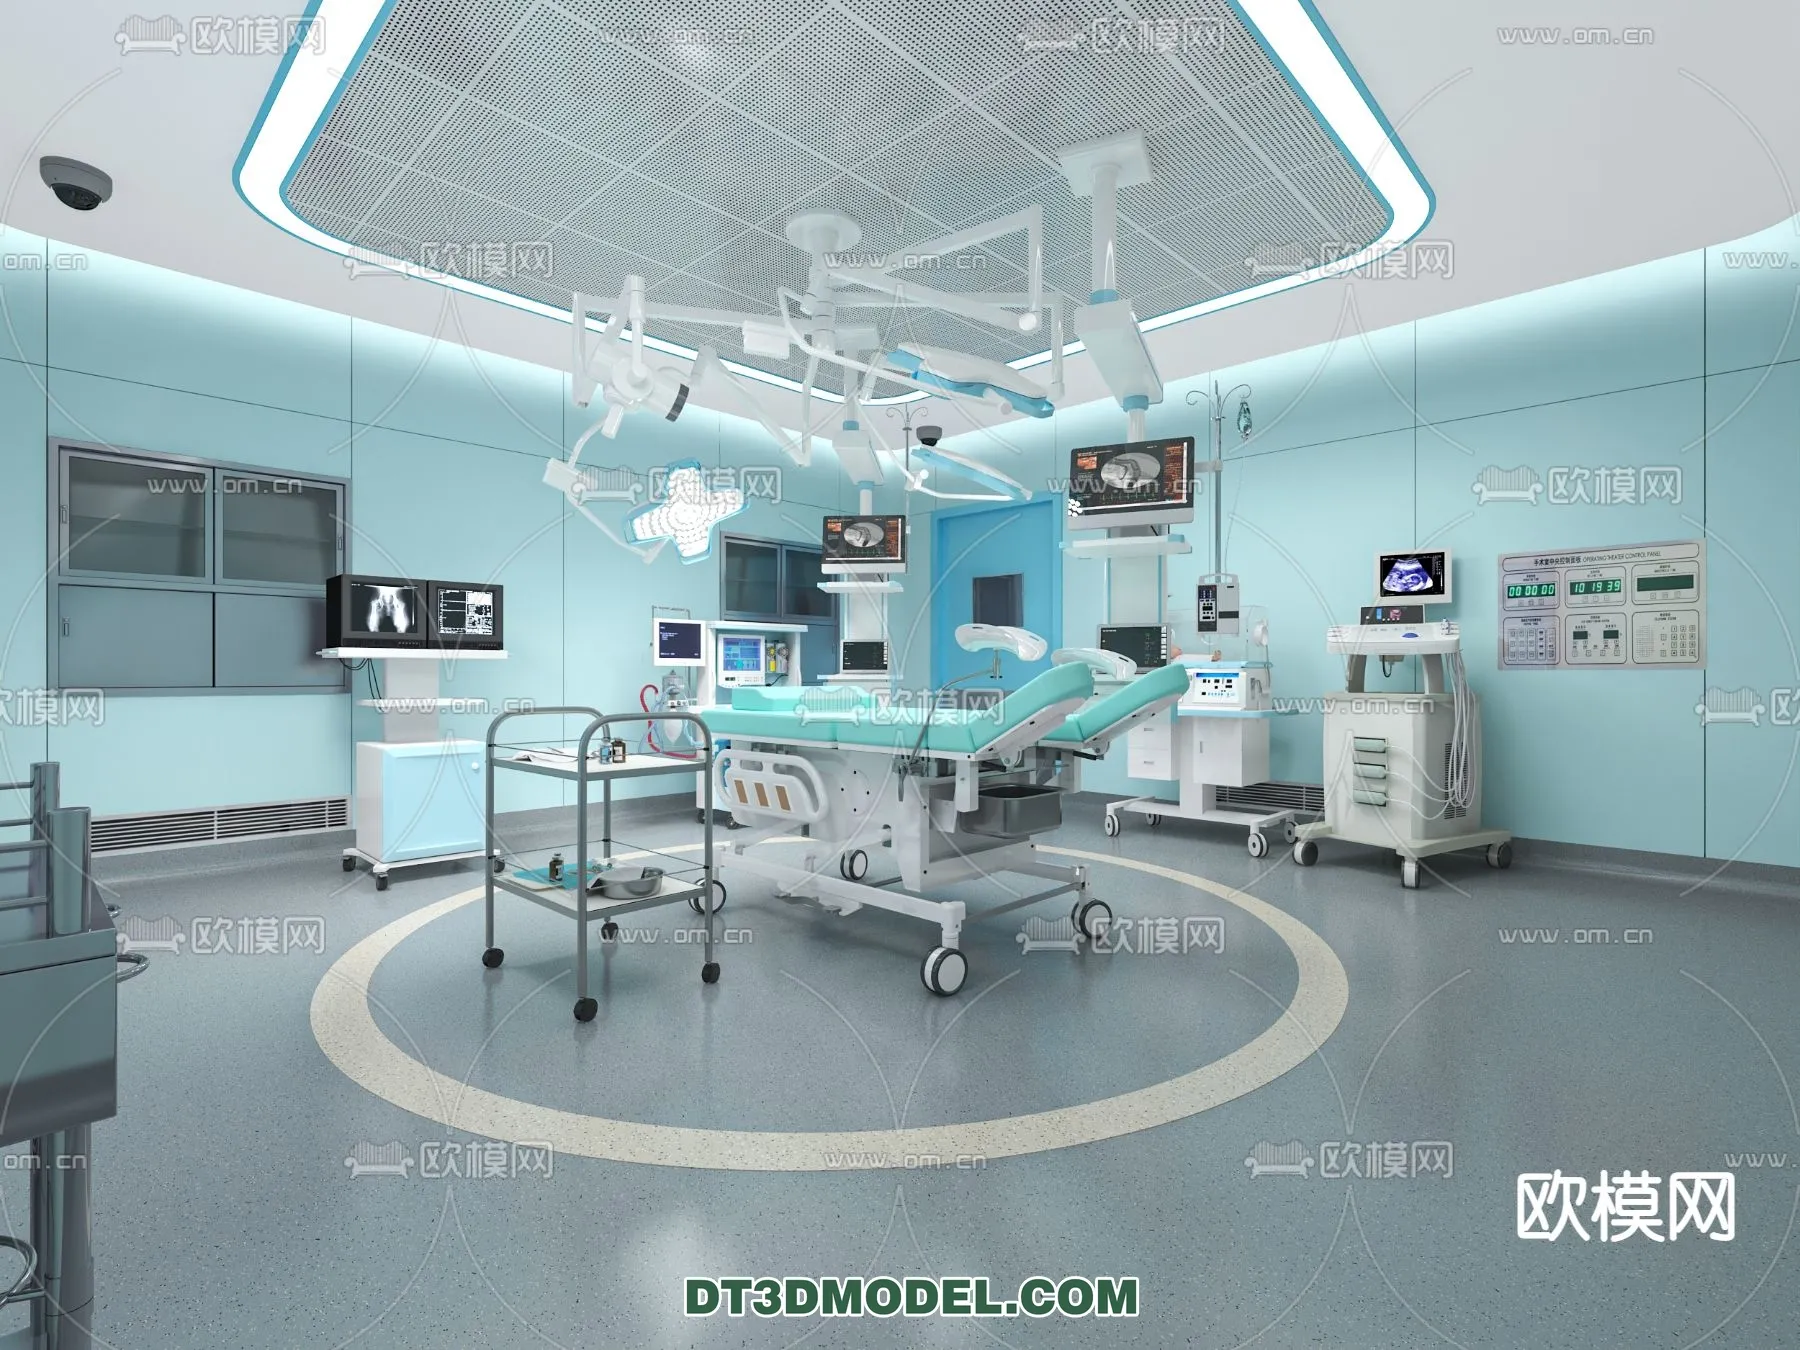 HOSPITAL 3D SCENES – MODERN – 0107